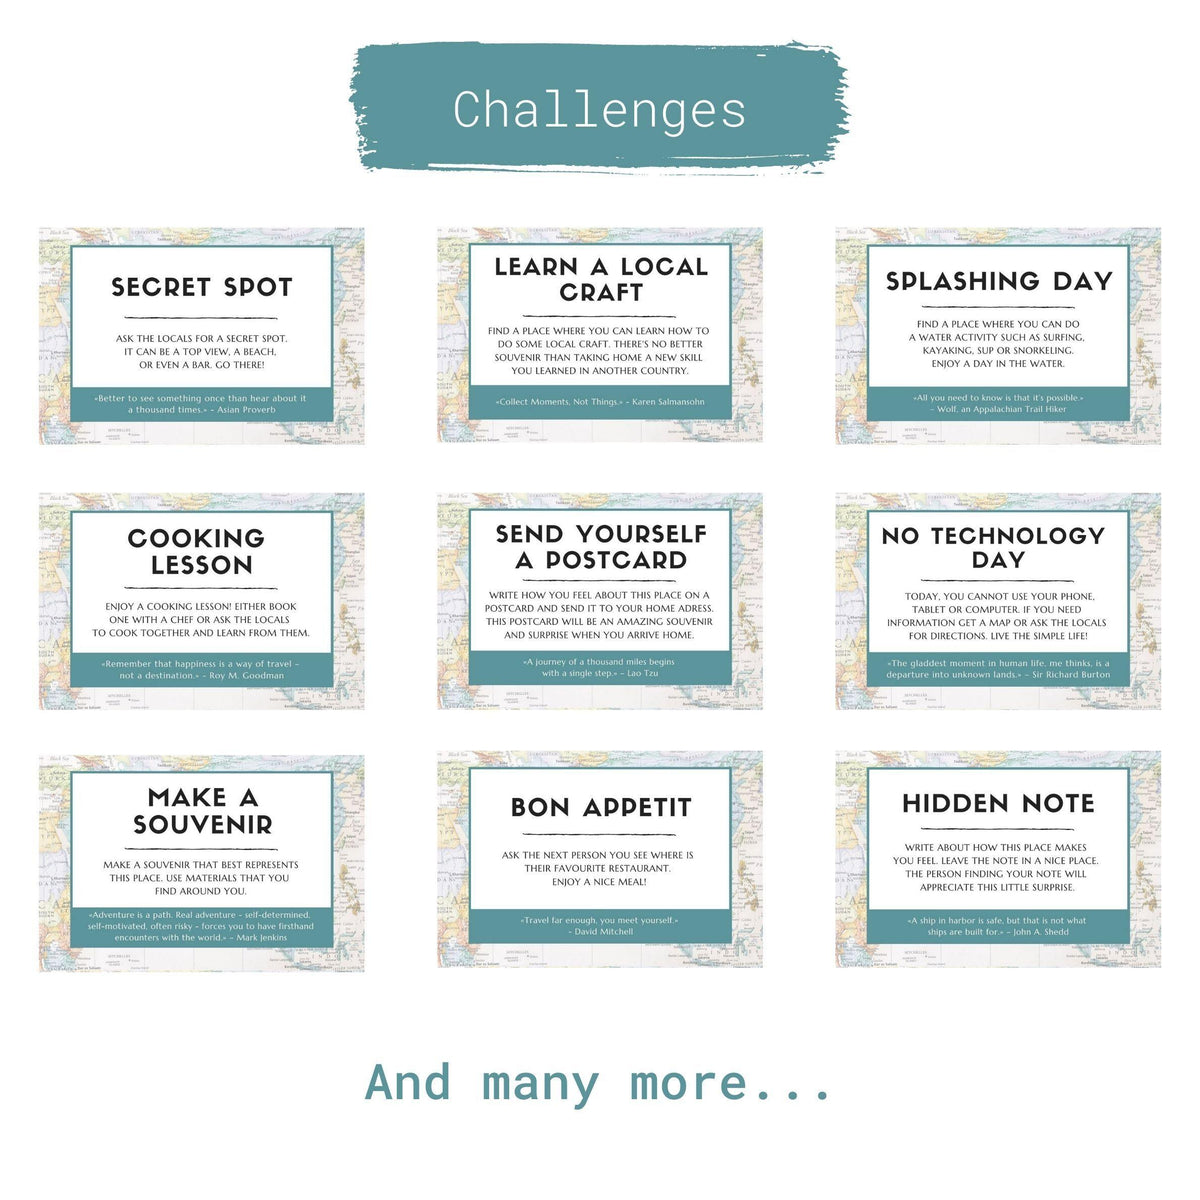 Travel Challenges - Original - Travel Challenges